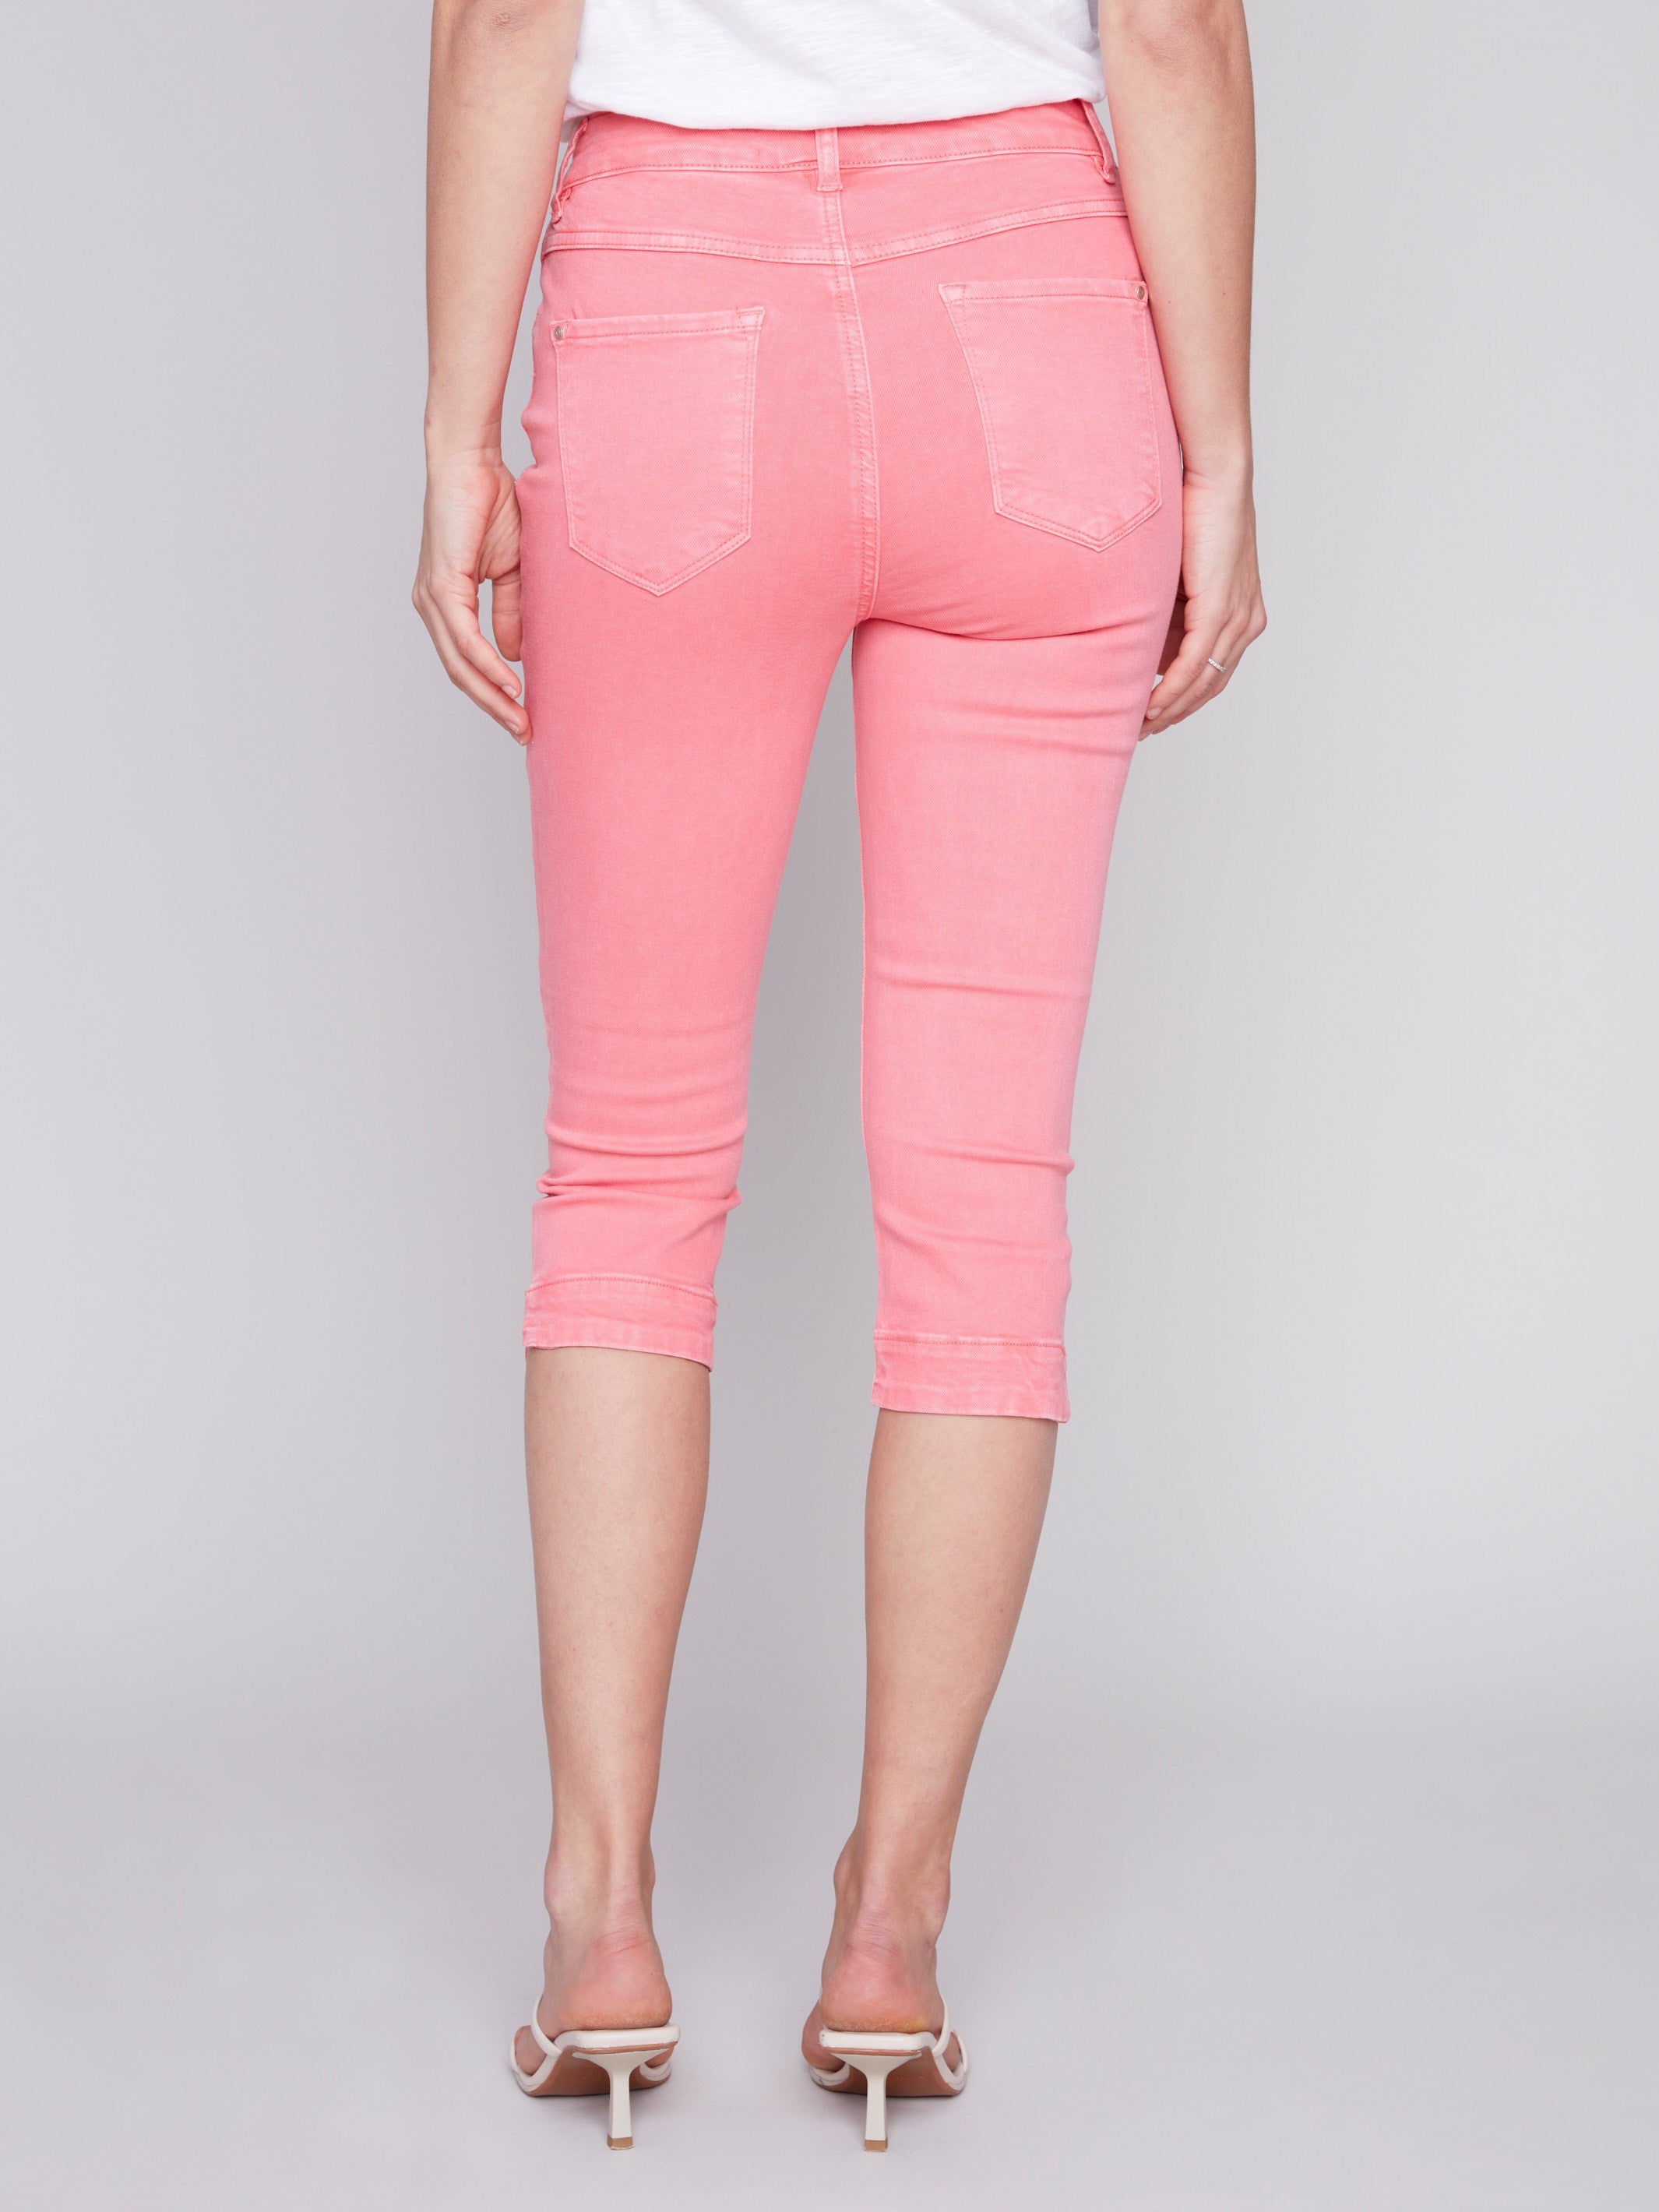 Knee High Capri Twill Pants - Flamingo - Charlie B Collection Canada - Image 3